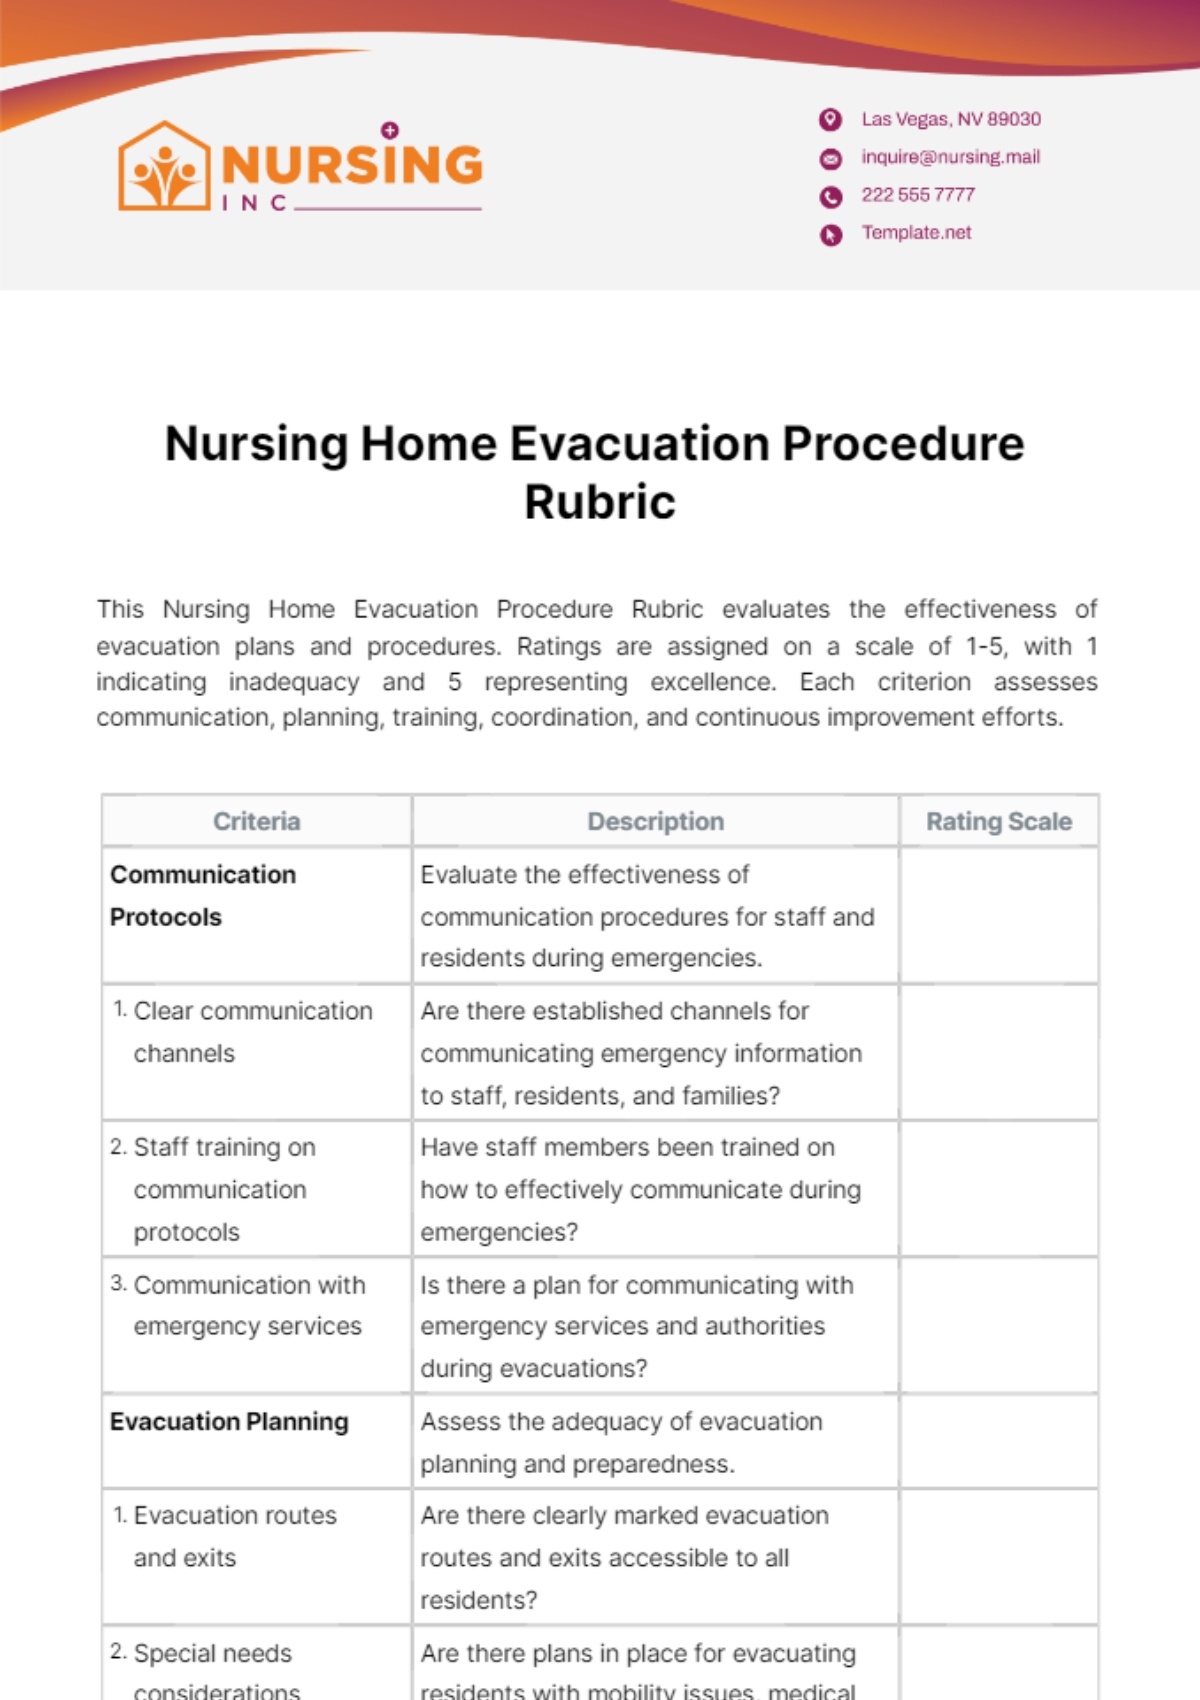 Nursing Home Evacuation Procedure Rubric Template